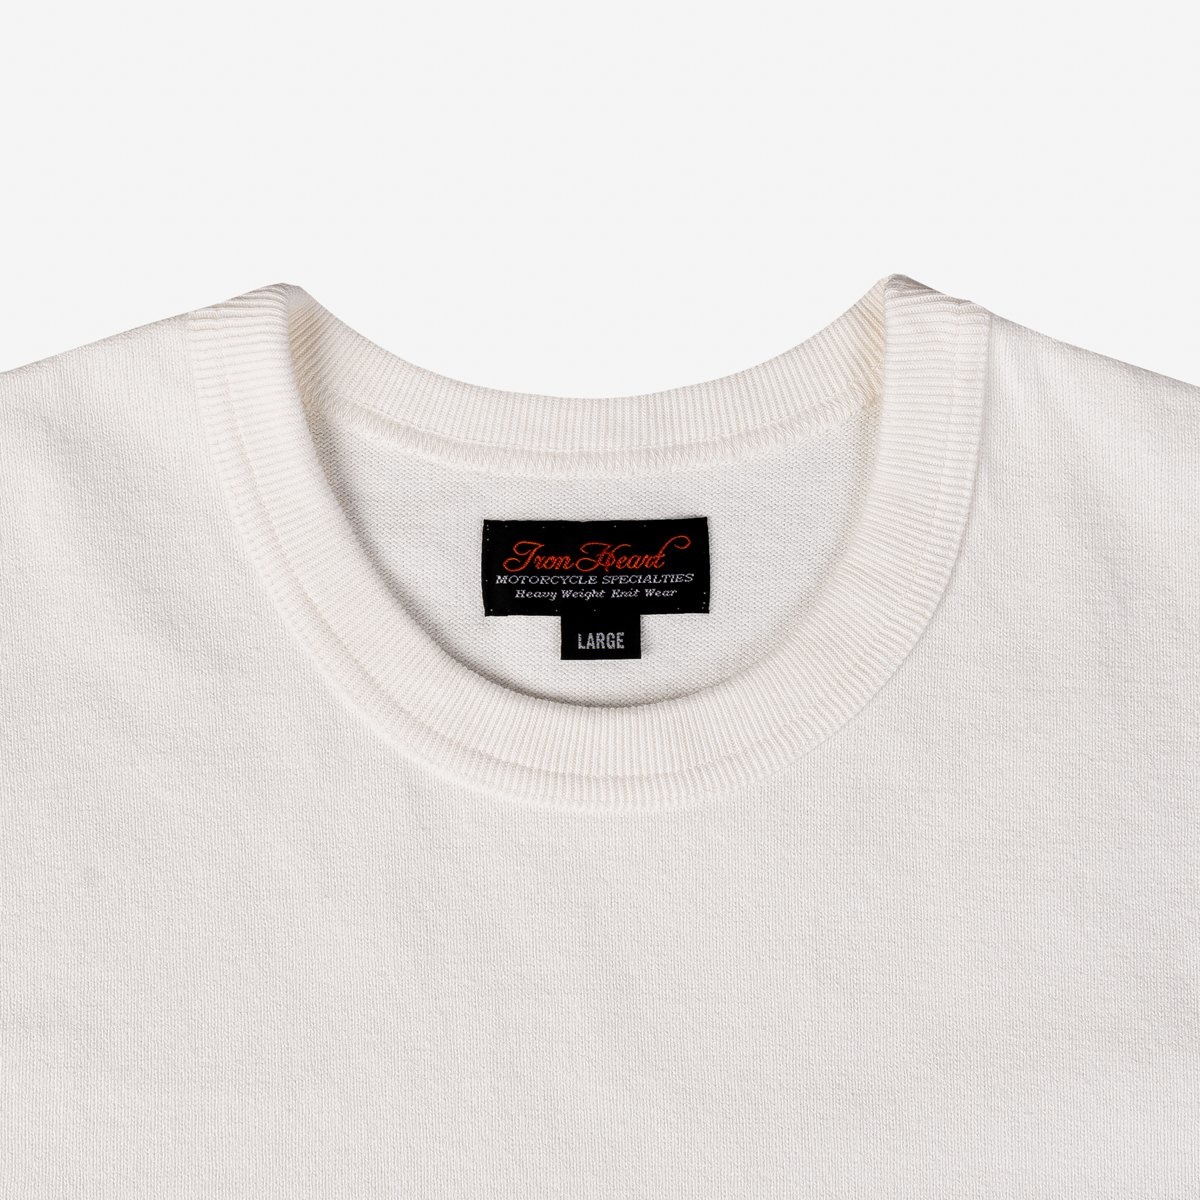 IHT-1600-WHT 11oz Cotton Knit Crew Neck T-Shirt - White - 6